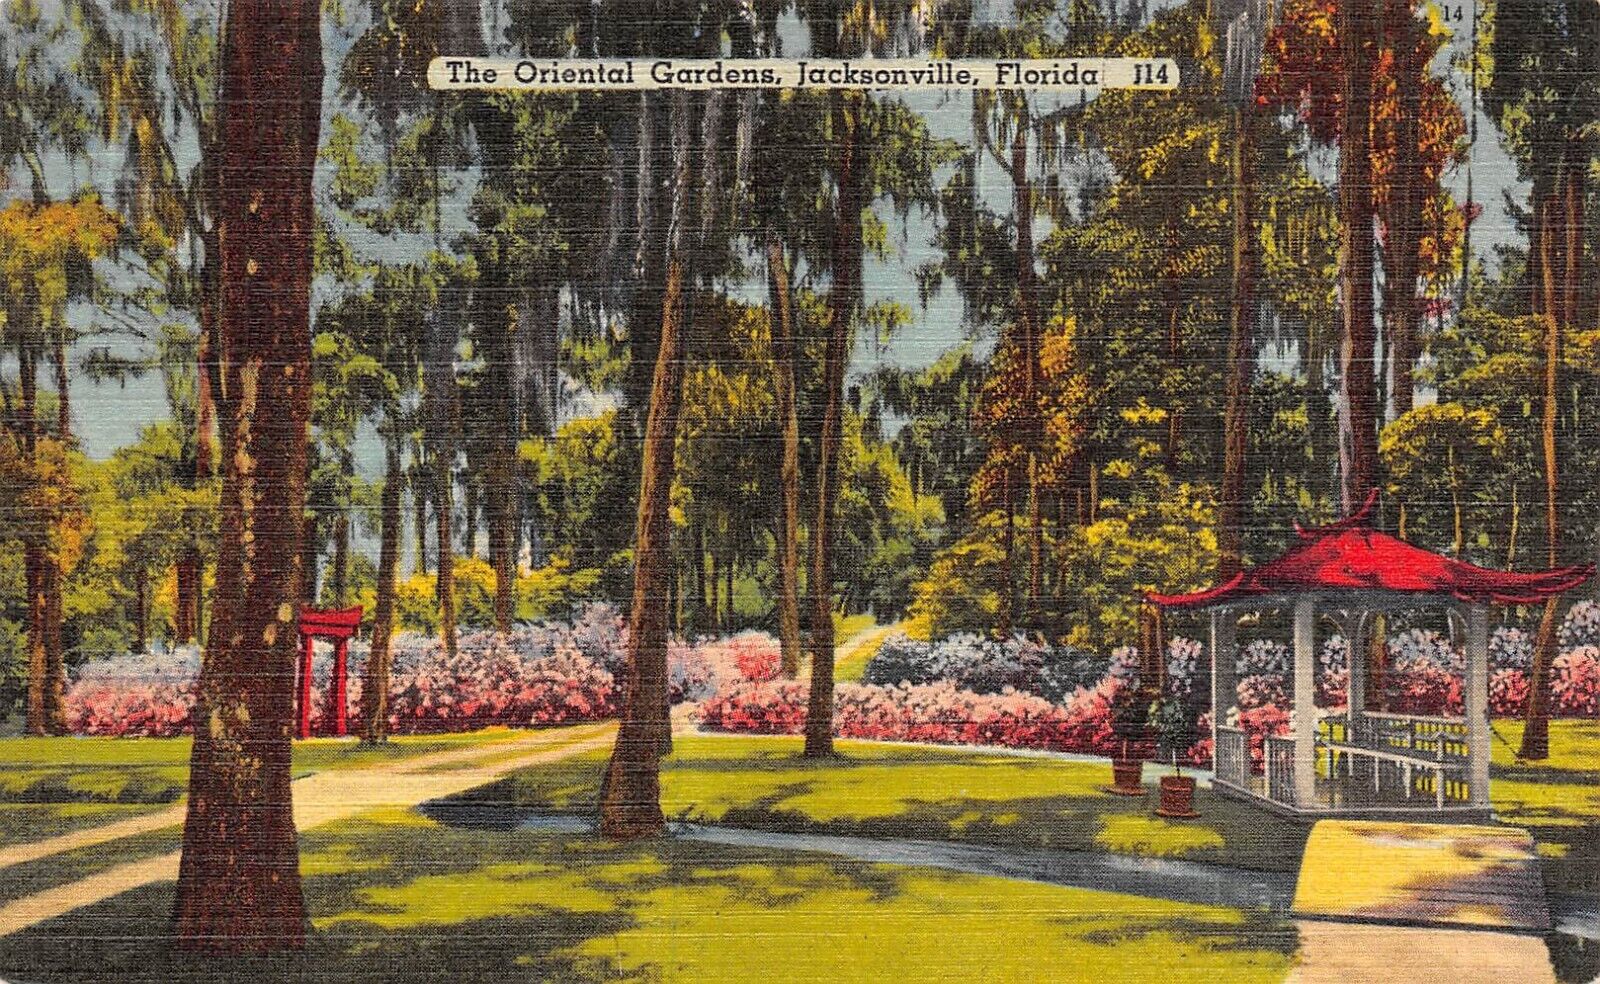 D2043 The Oriental Gardens, Jacksonville, Florida - Linen Postcard Tichnor Bros.